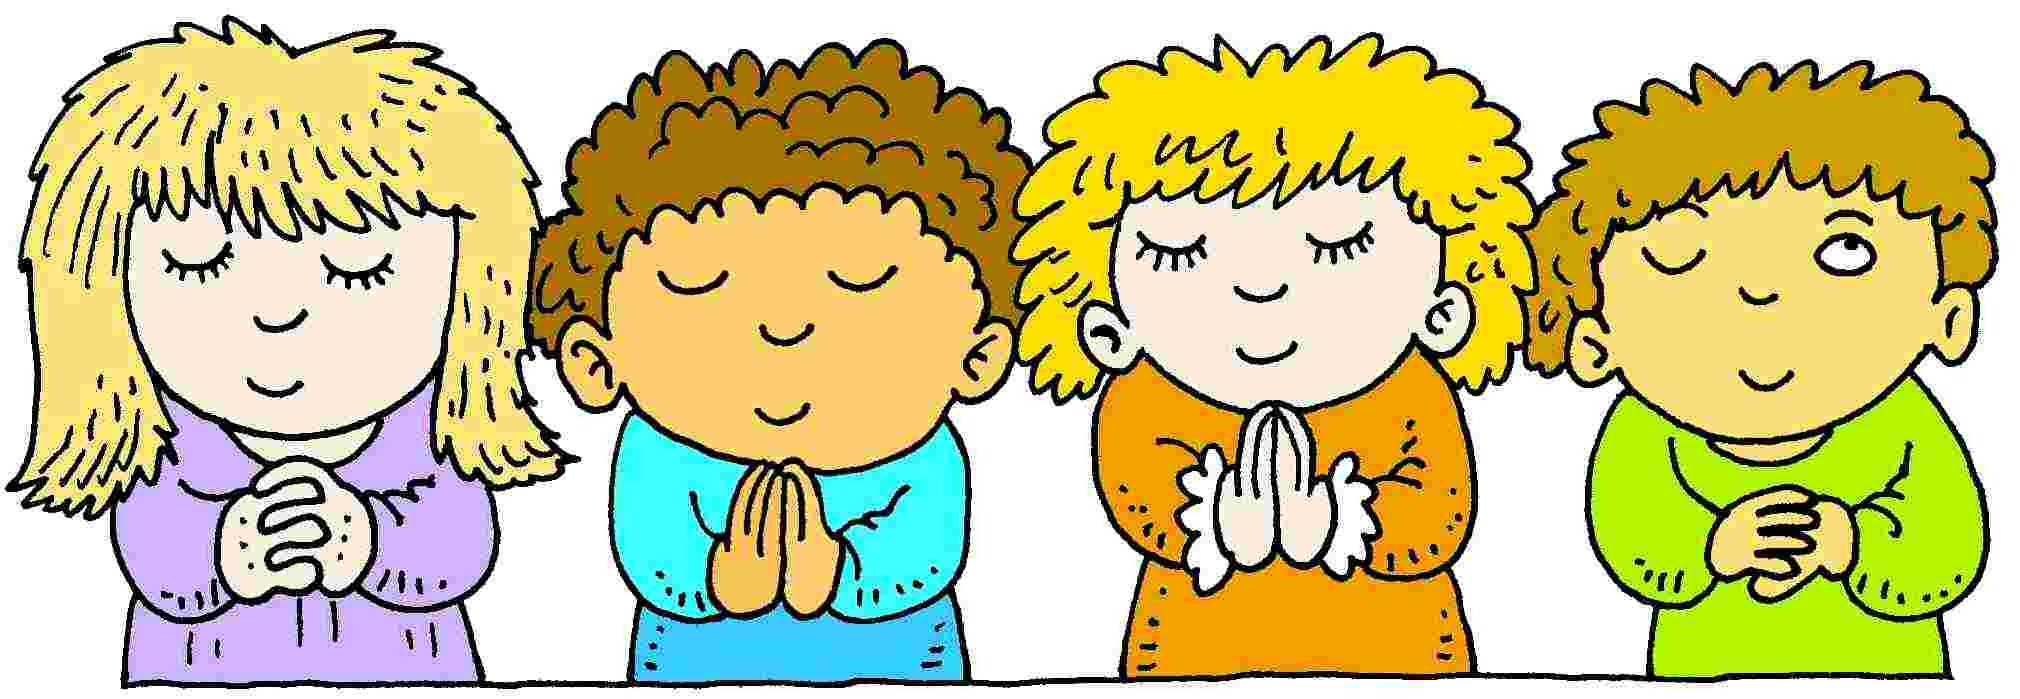 child prayer background